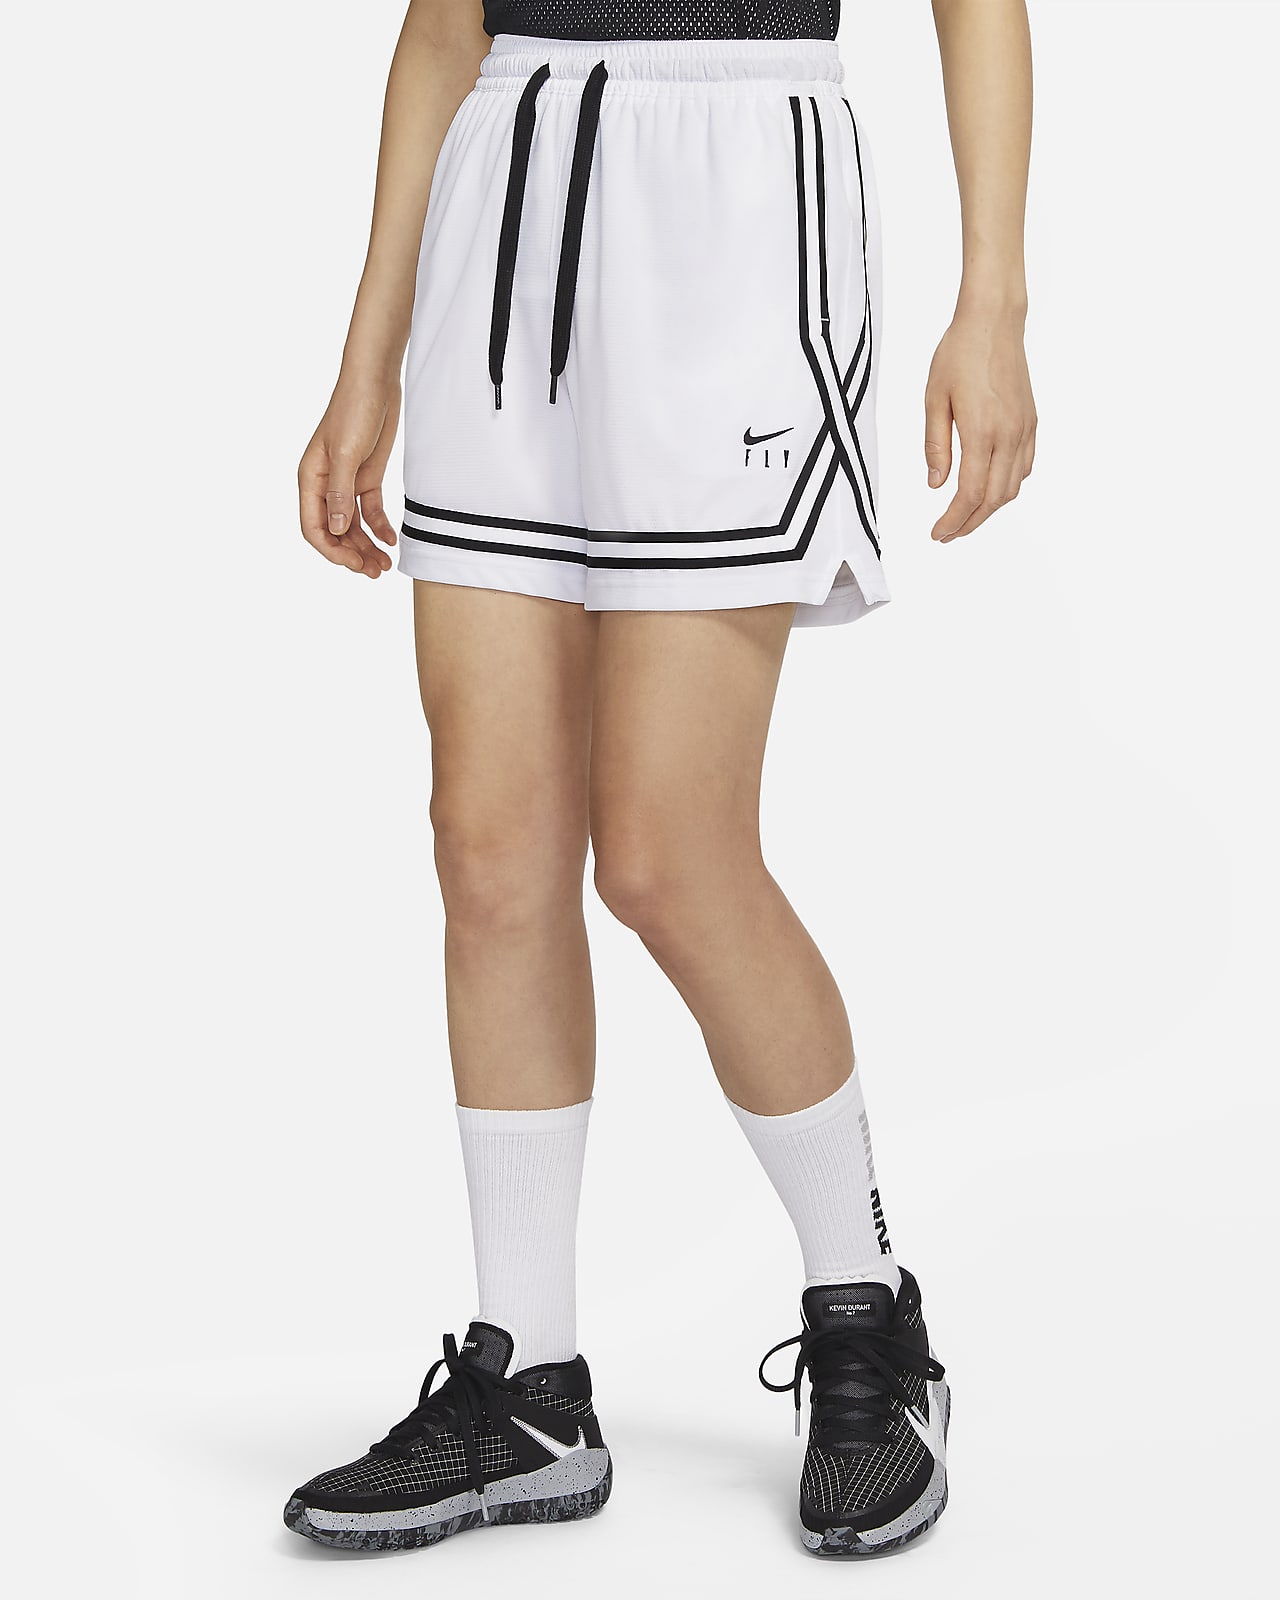 Stereotype Harmonie ik ben gelukkig Nike Fly Crossover Women's Basketball Shorts. Nike JP